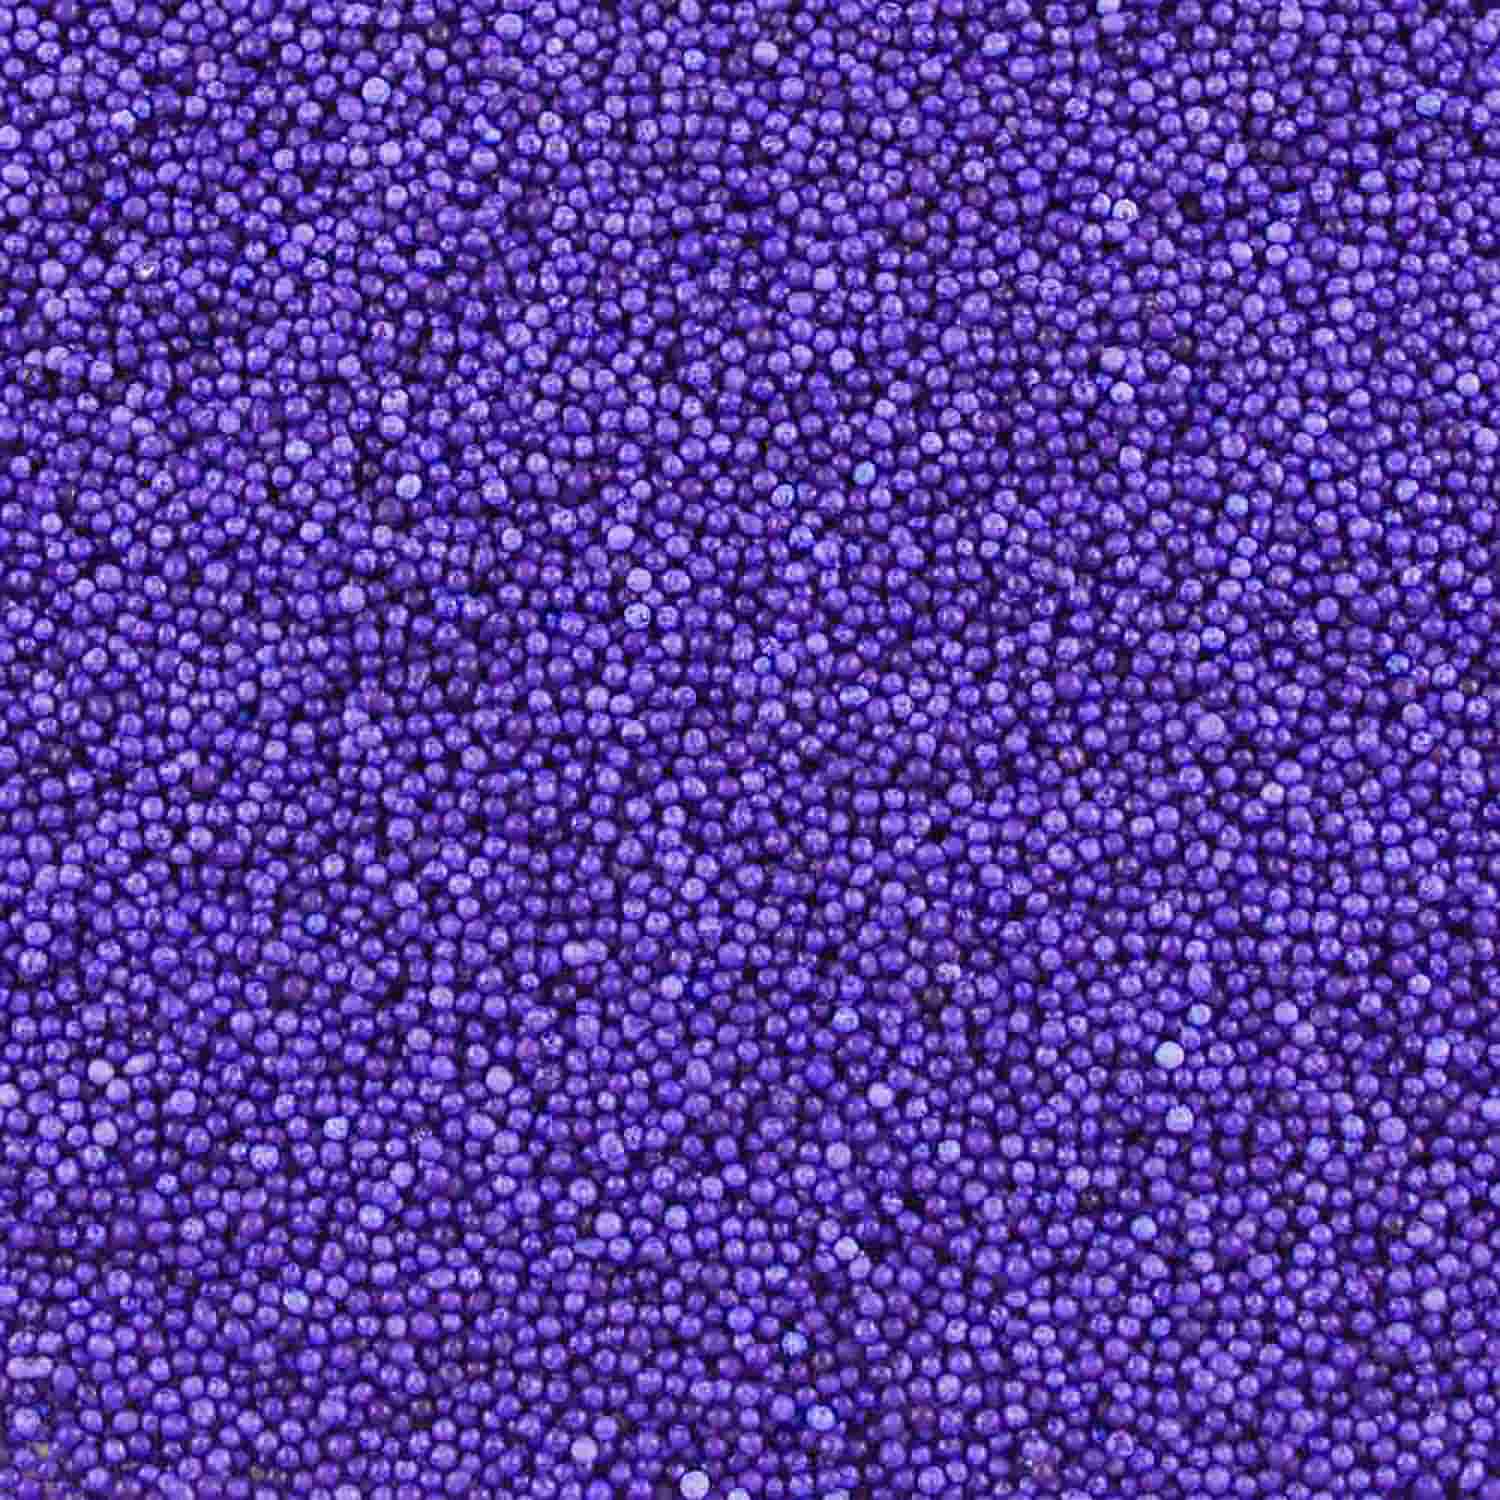 Lavender Purple Nonpareil Sprinkles - Sale